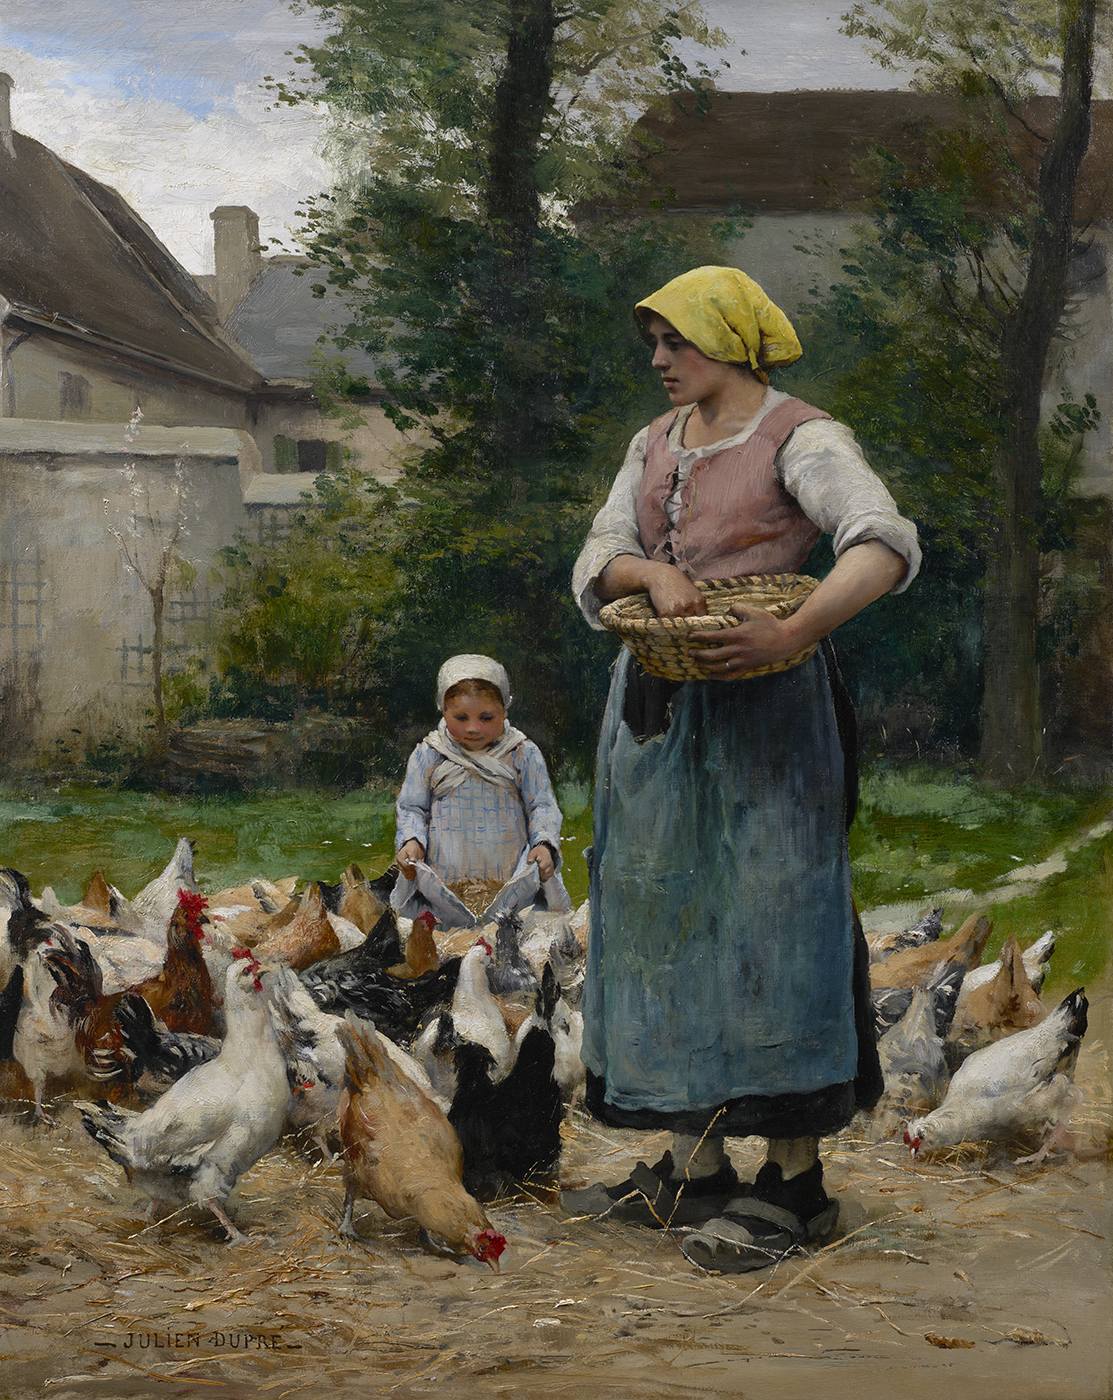 mother and daughter feeding chickens - Julien Dupré catalogue raisonné